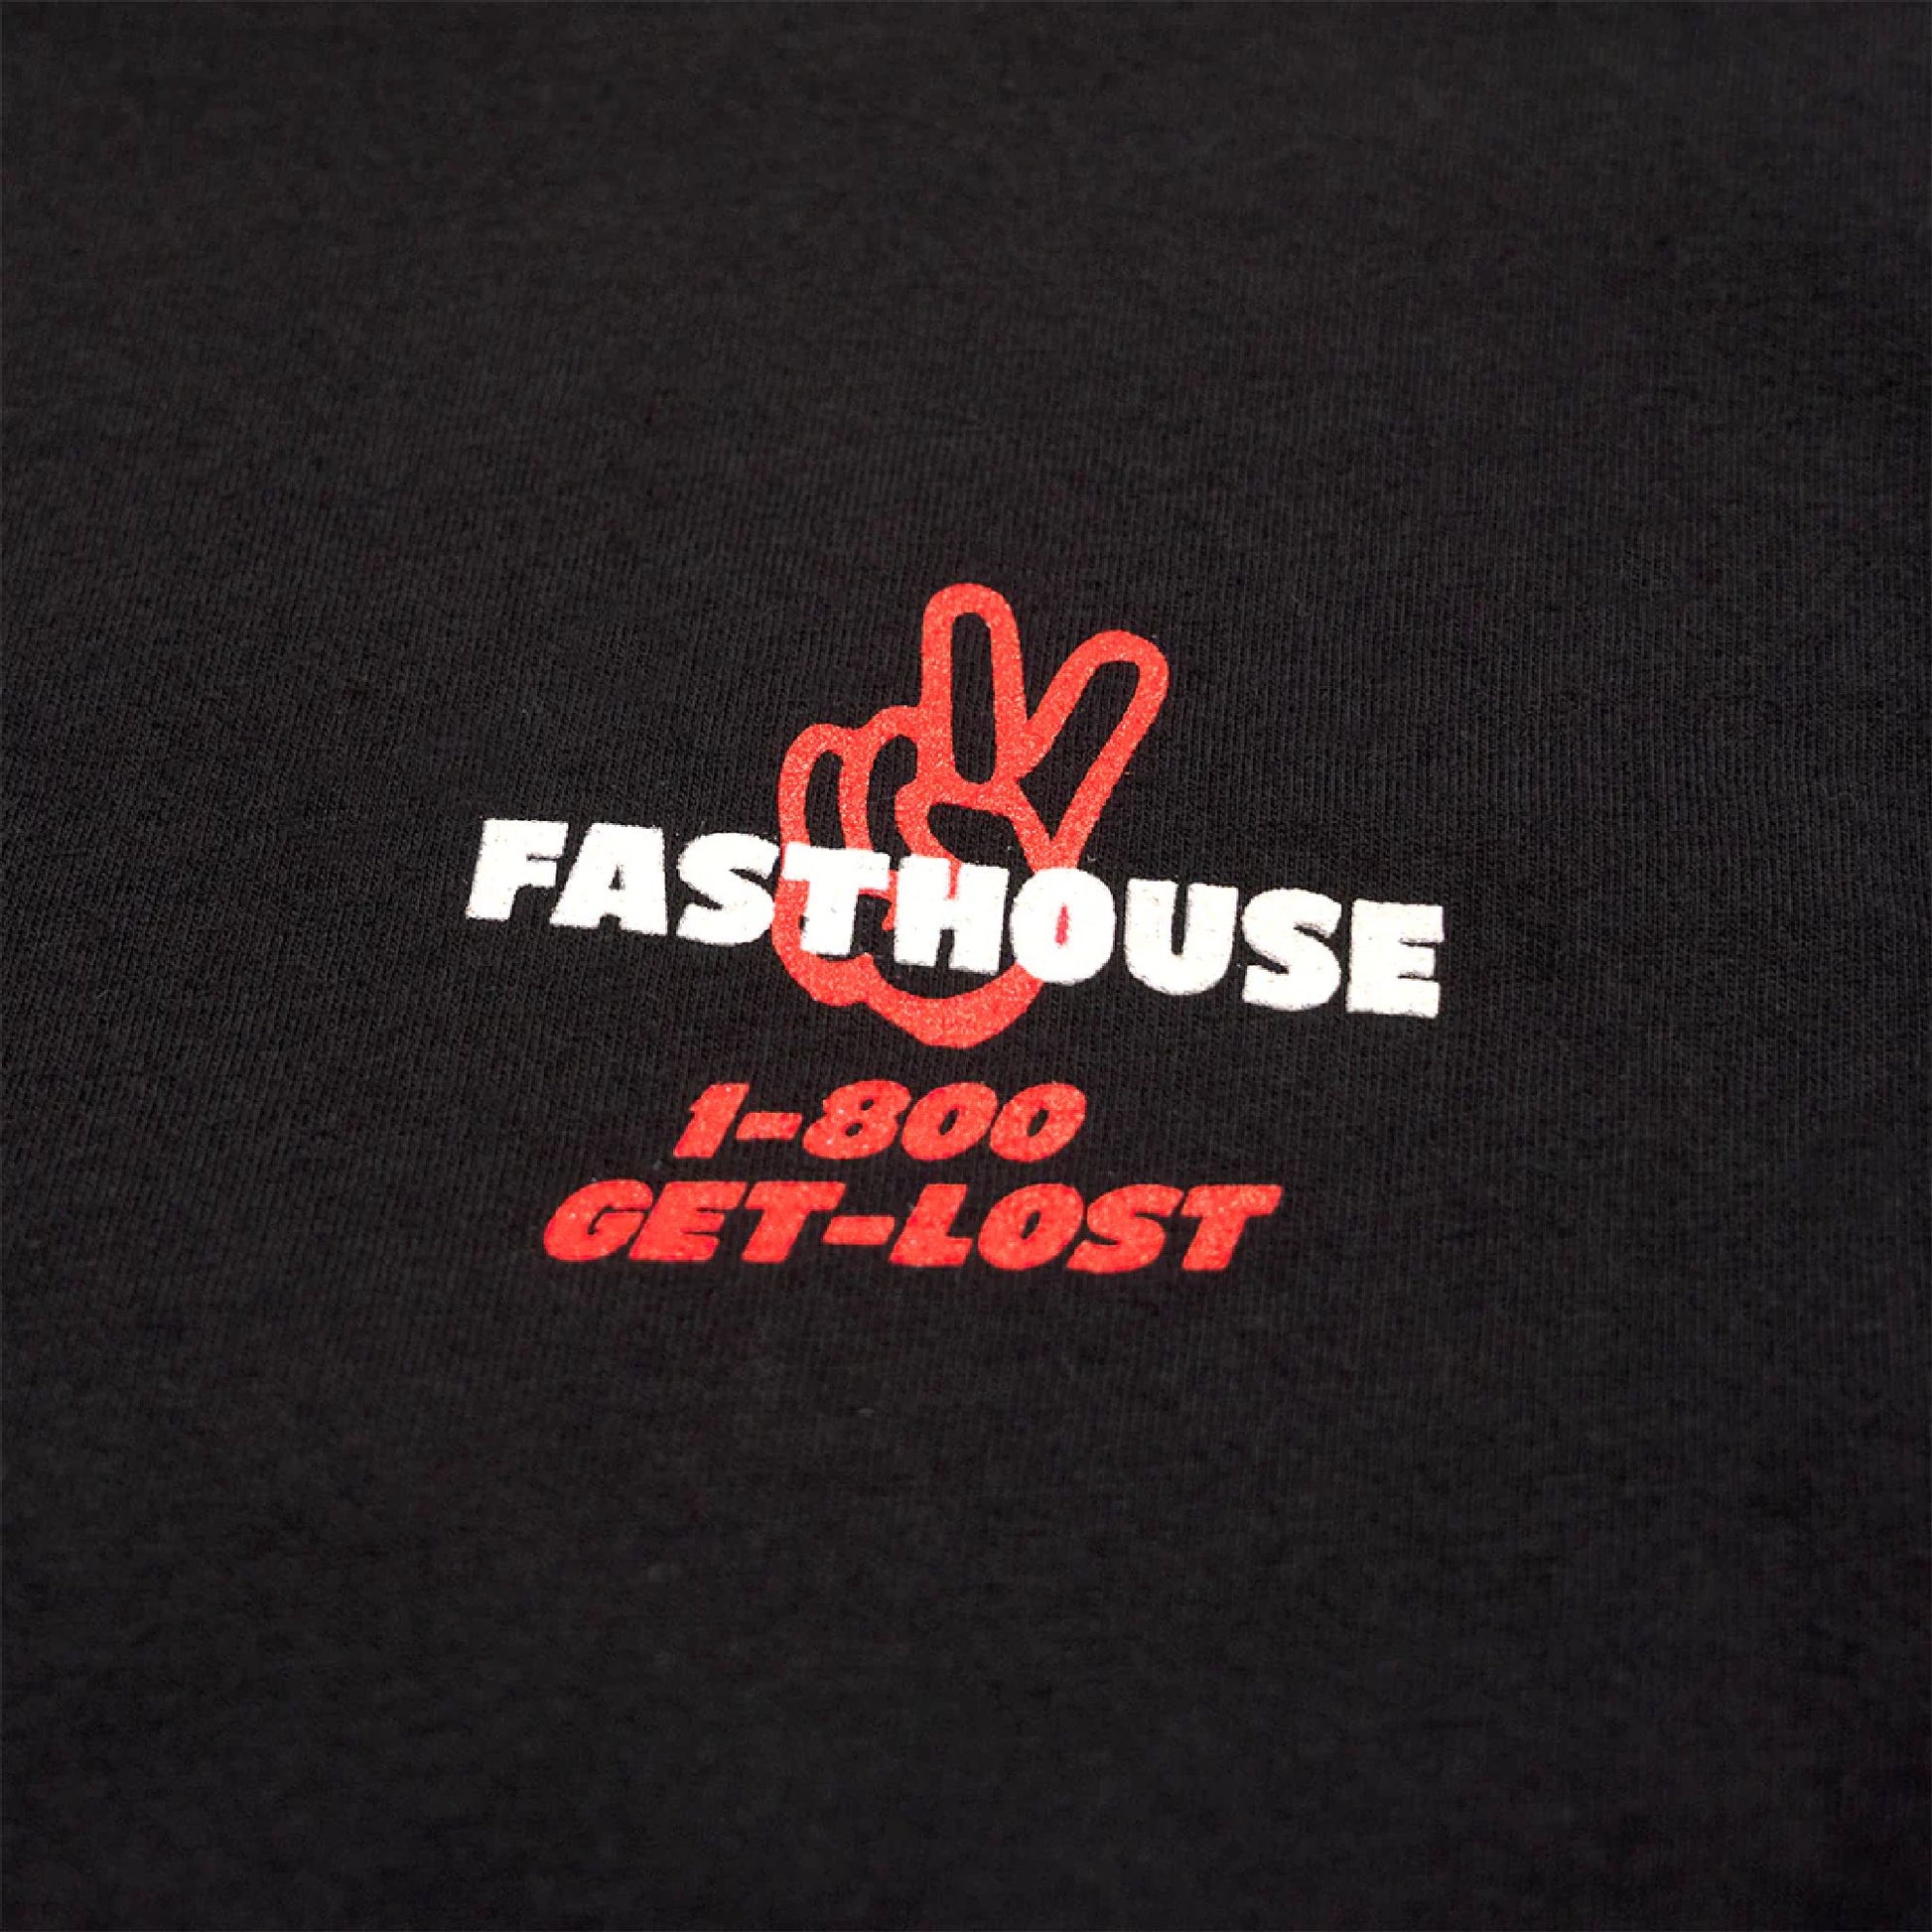 Fasthouse Youth Coast 2 Coast SS Tee Black SS Shirts